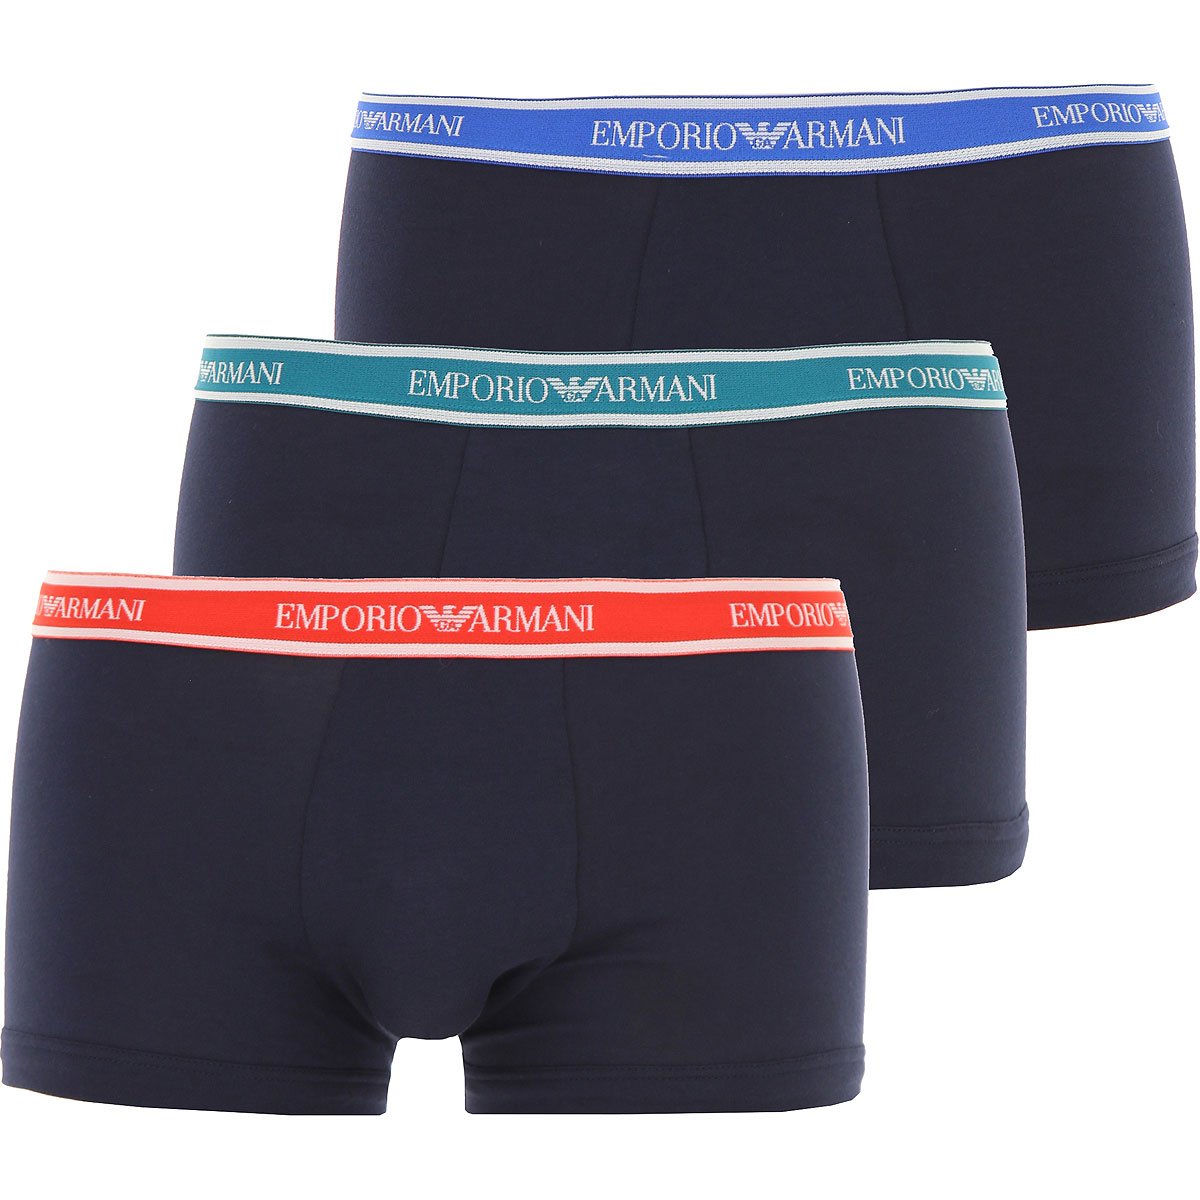 Mens Underwear Emporio Armani, Style code: 111357-9p717-40035